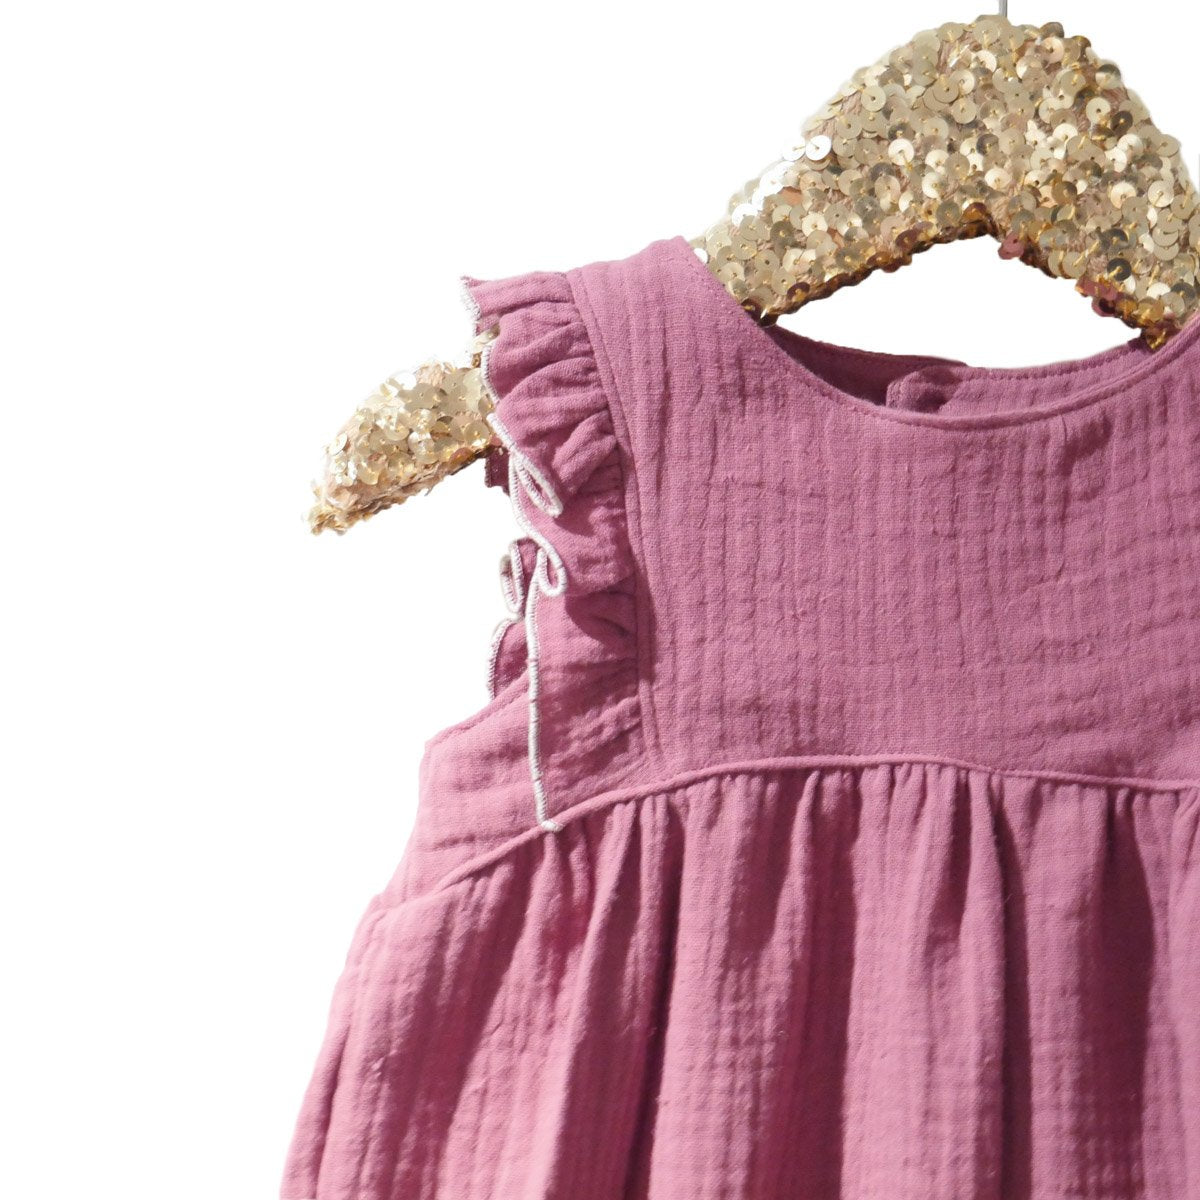 Ikatee - MADRID Jumpsuit/Playsuit - Babies 6m-4Y - Paper Sewing Pattern